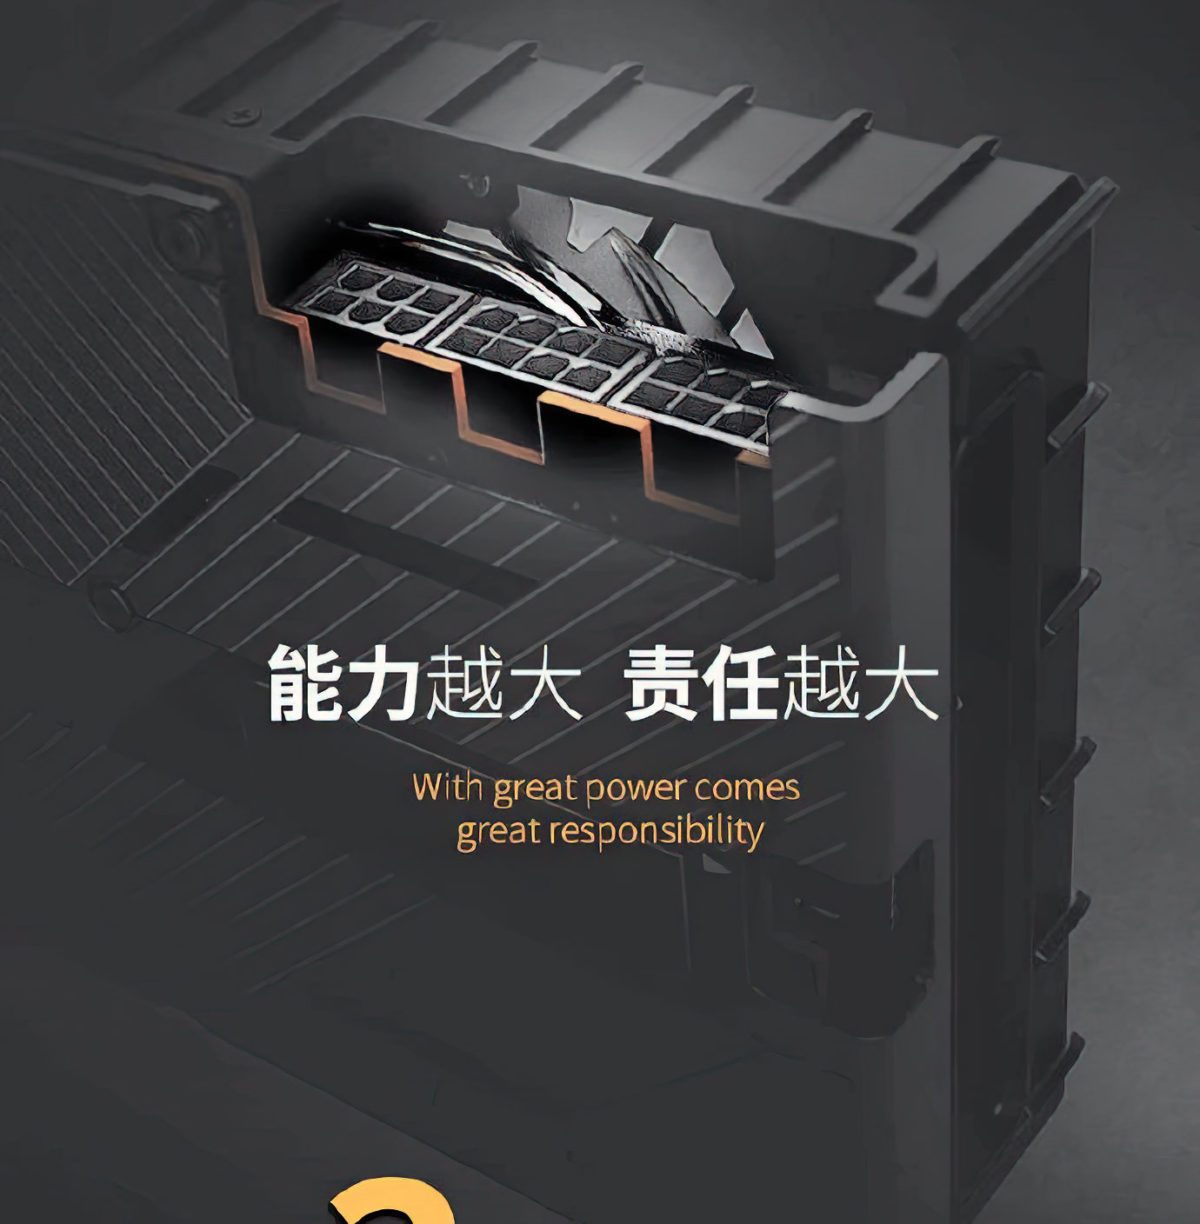 SAPPHIRE-Radeon-RX-6900-XT-TOXIC-3-1200x1224.jpg